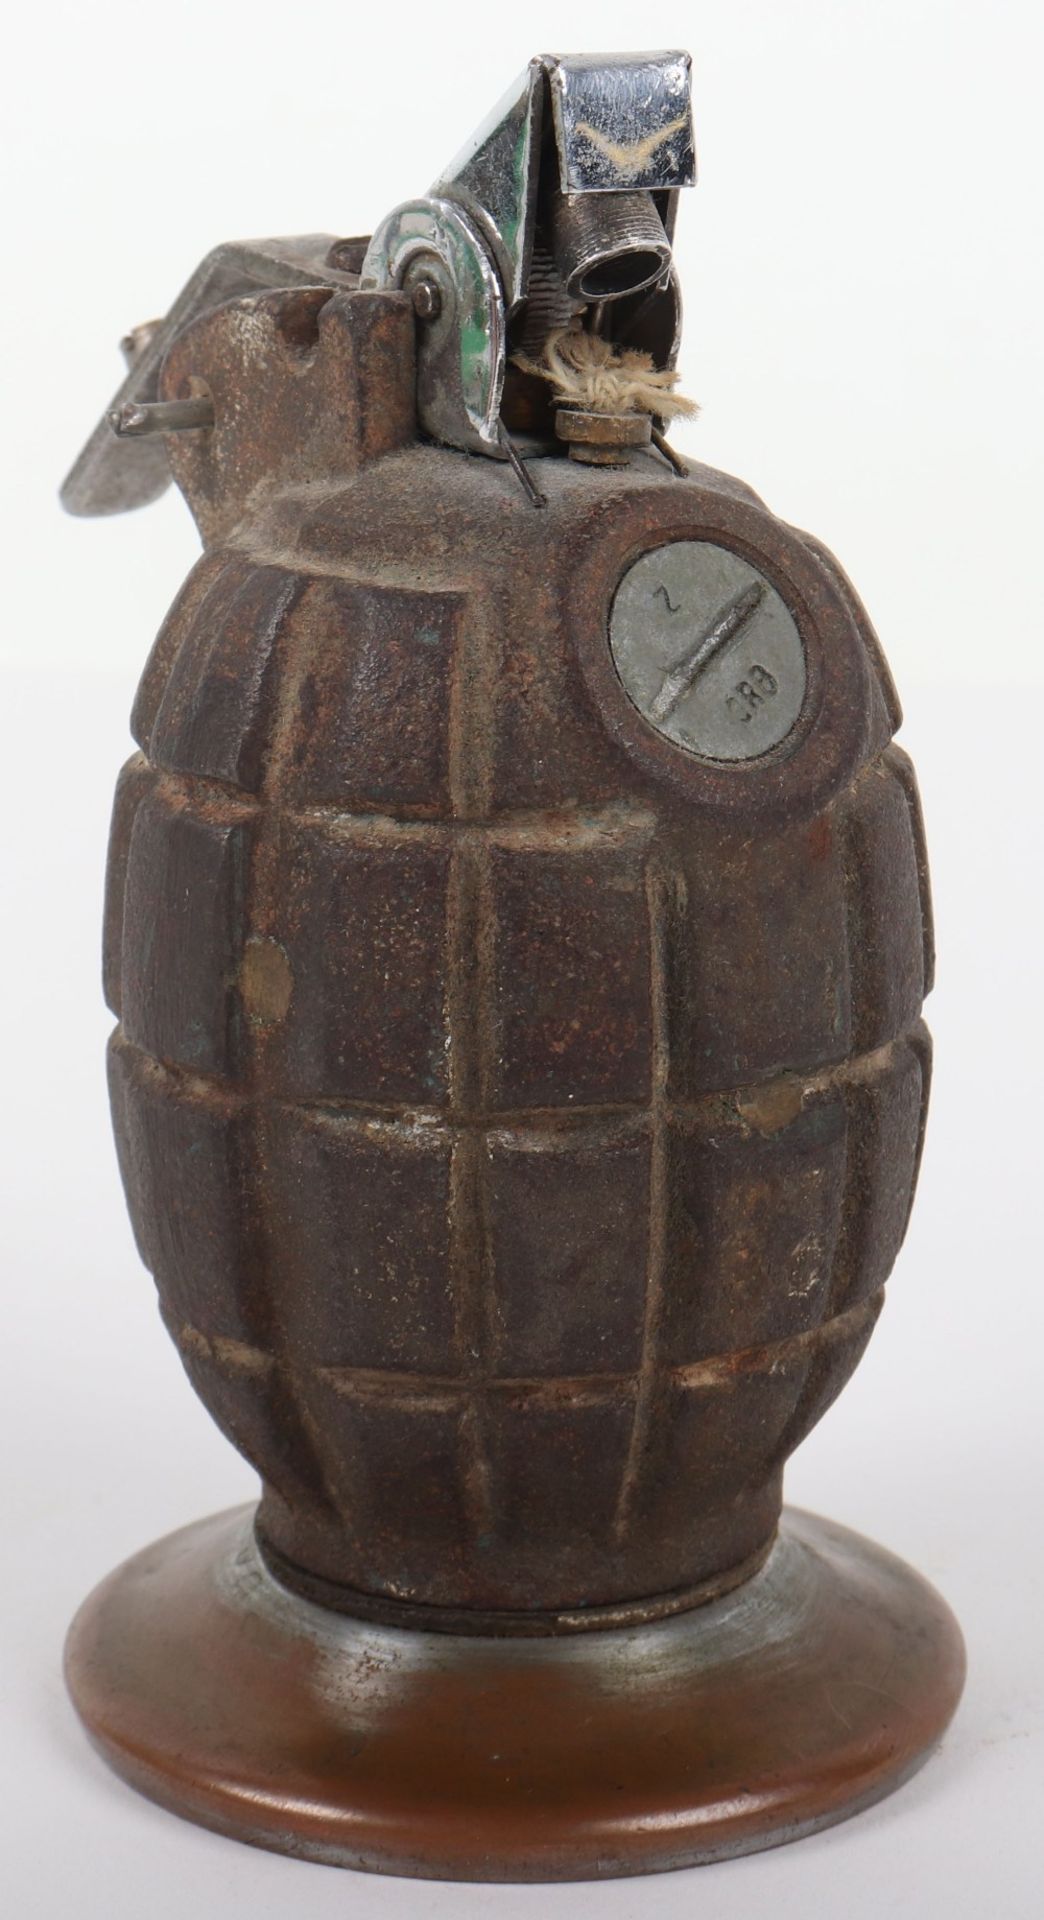 Inert British Mills Grenade Converted to Table Lighter